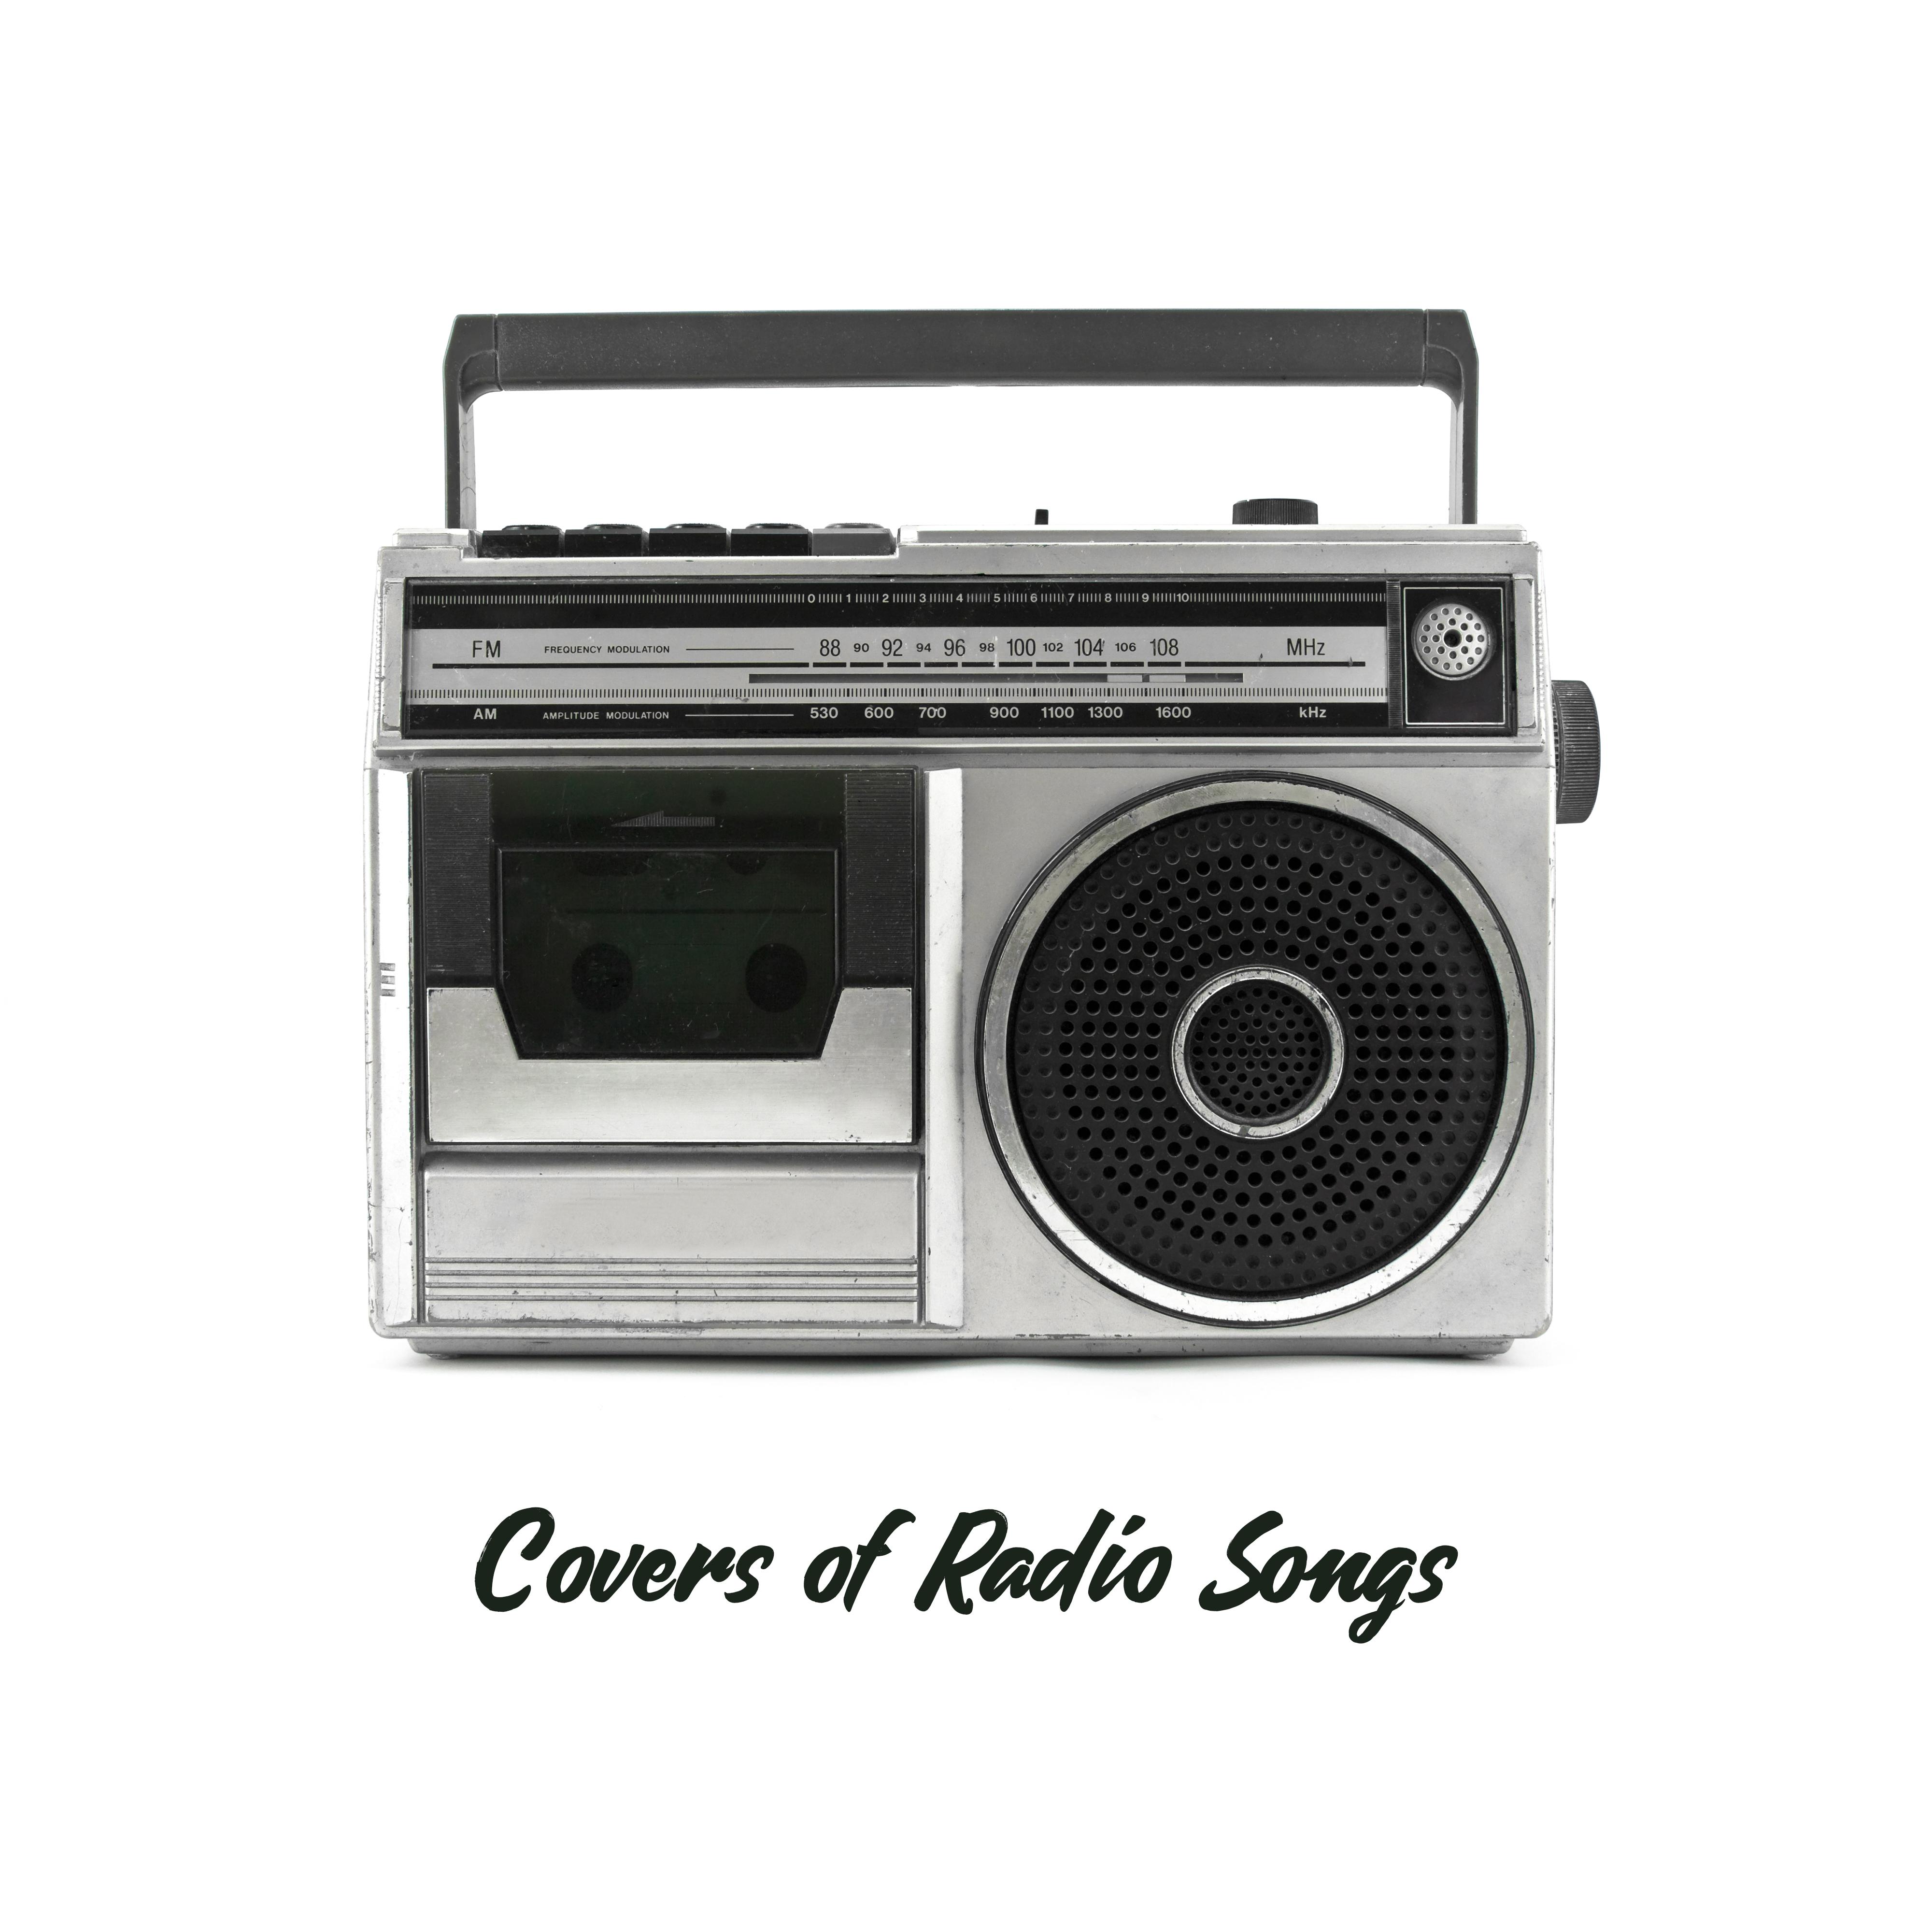 Covers of Radio Songs